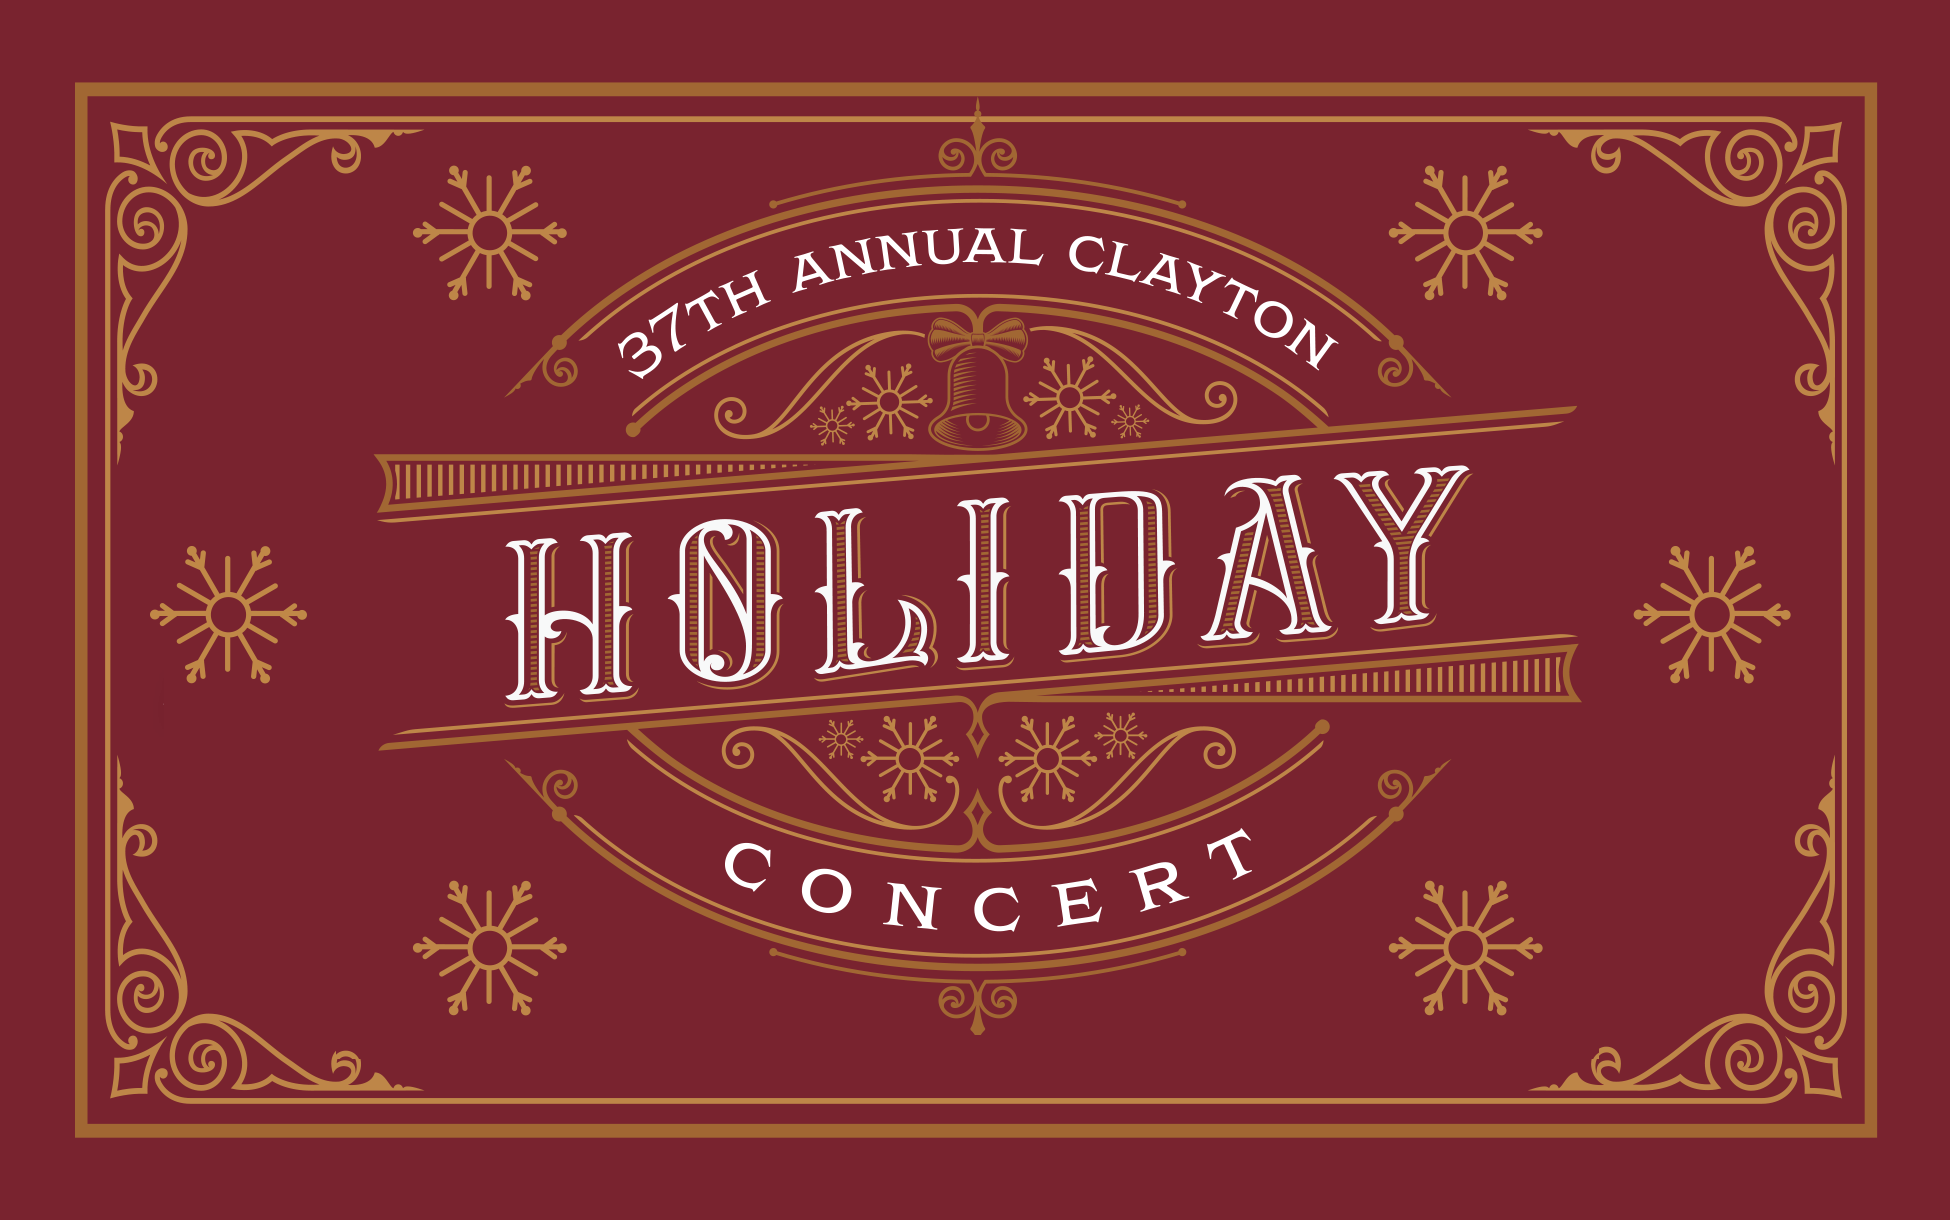 Image for Clayton Holiday Concert: An Olde English Christmas